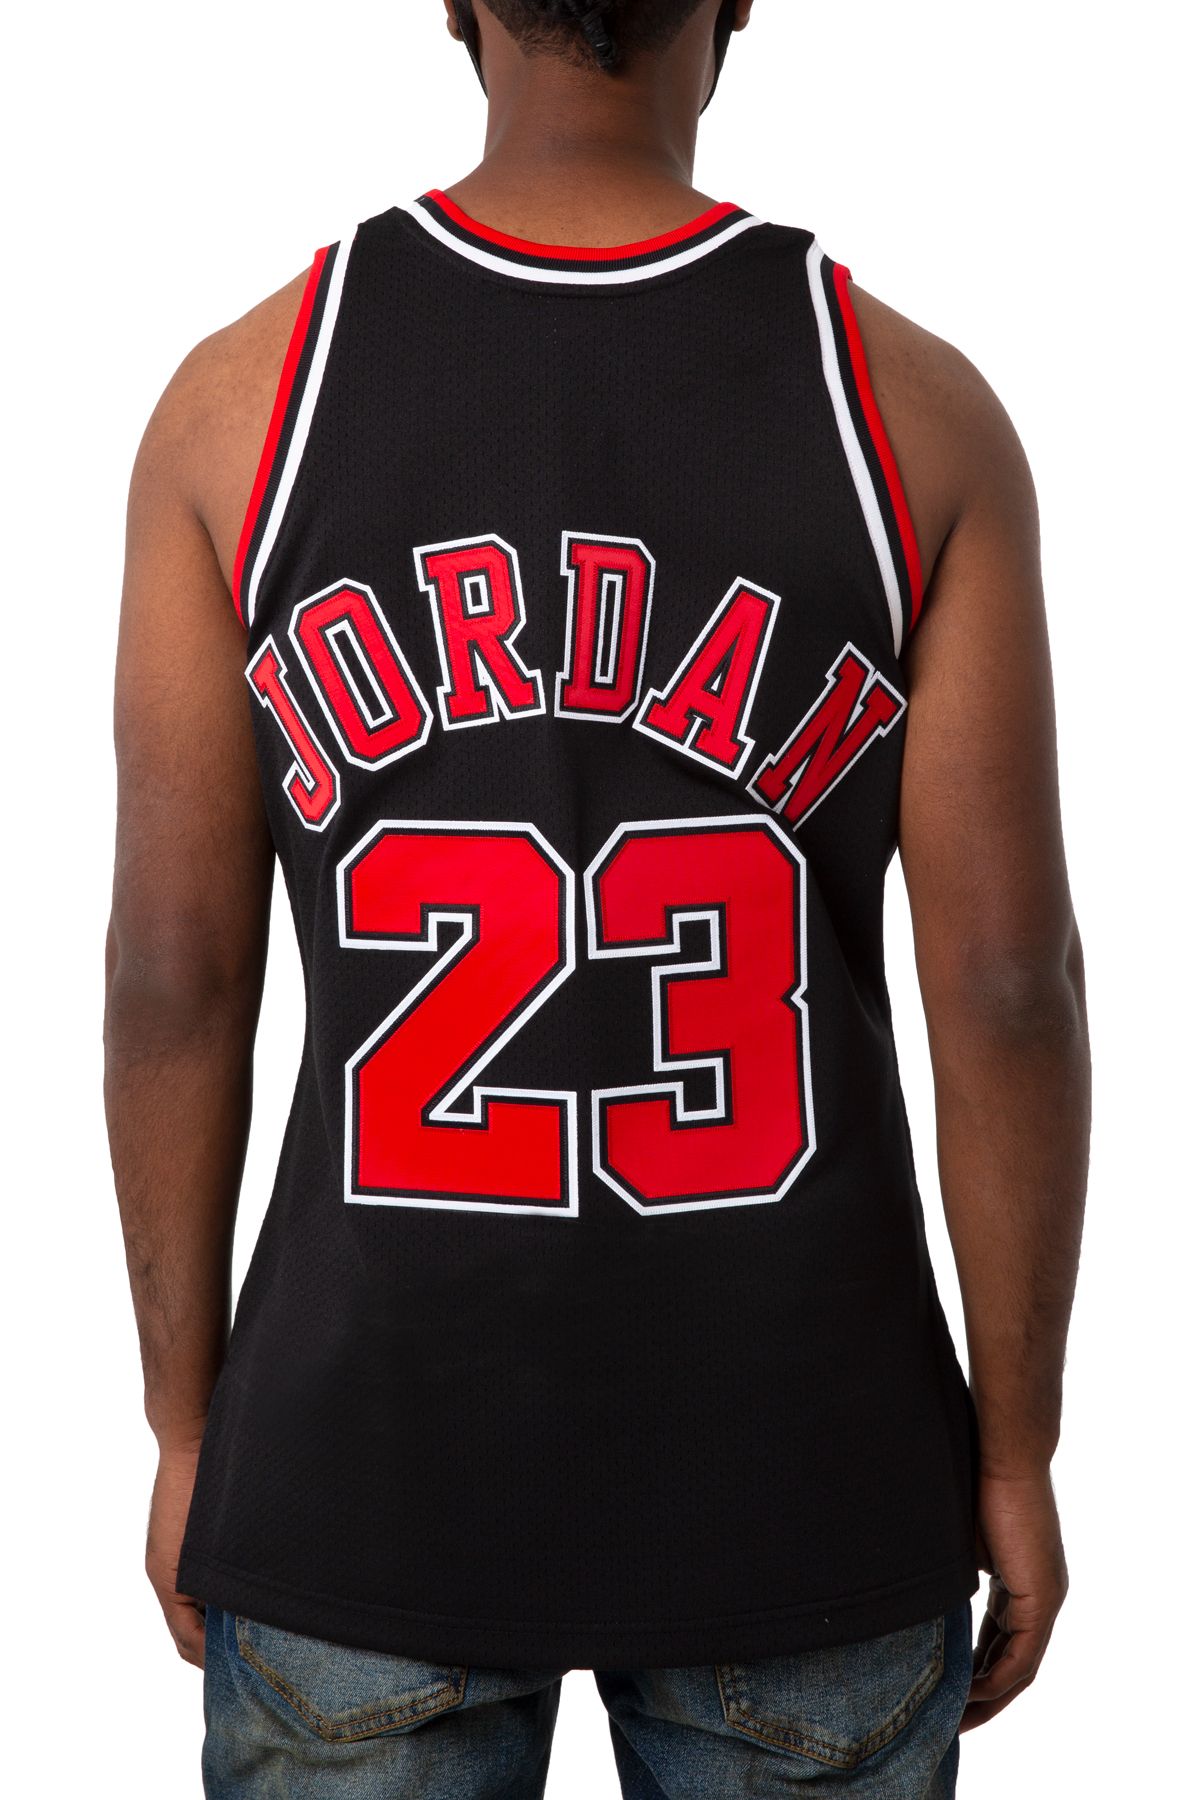 MITCHELL AND NESS Authentic Michael Jordan Chicago Bulls 1997-98 Jersey  AJY4CP19016-CBUUNRD97MJO - Shiekh